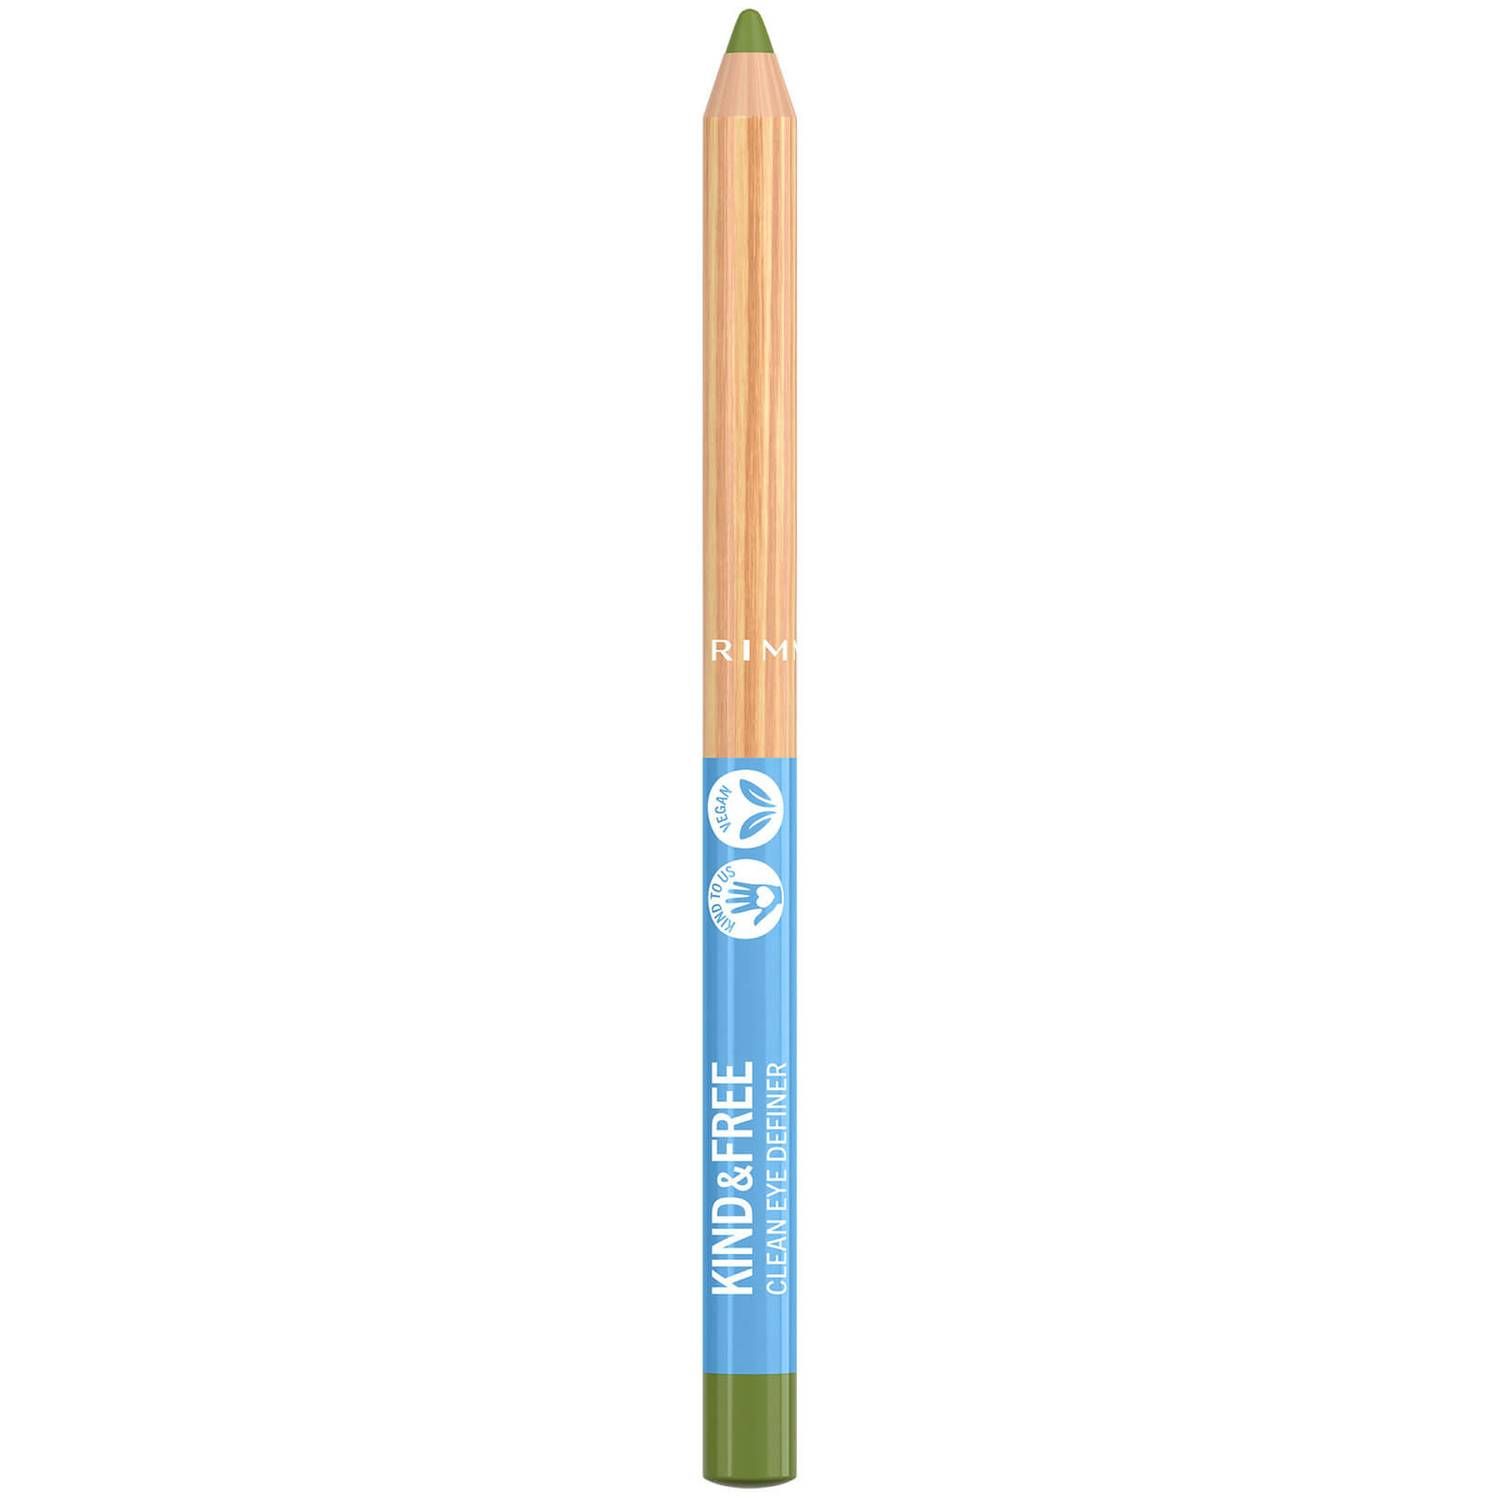 Rimmel Kind & Free Eye Pencil# 004 Green